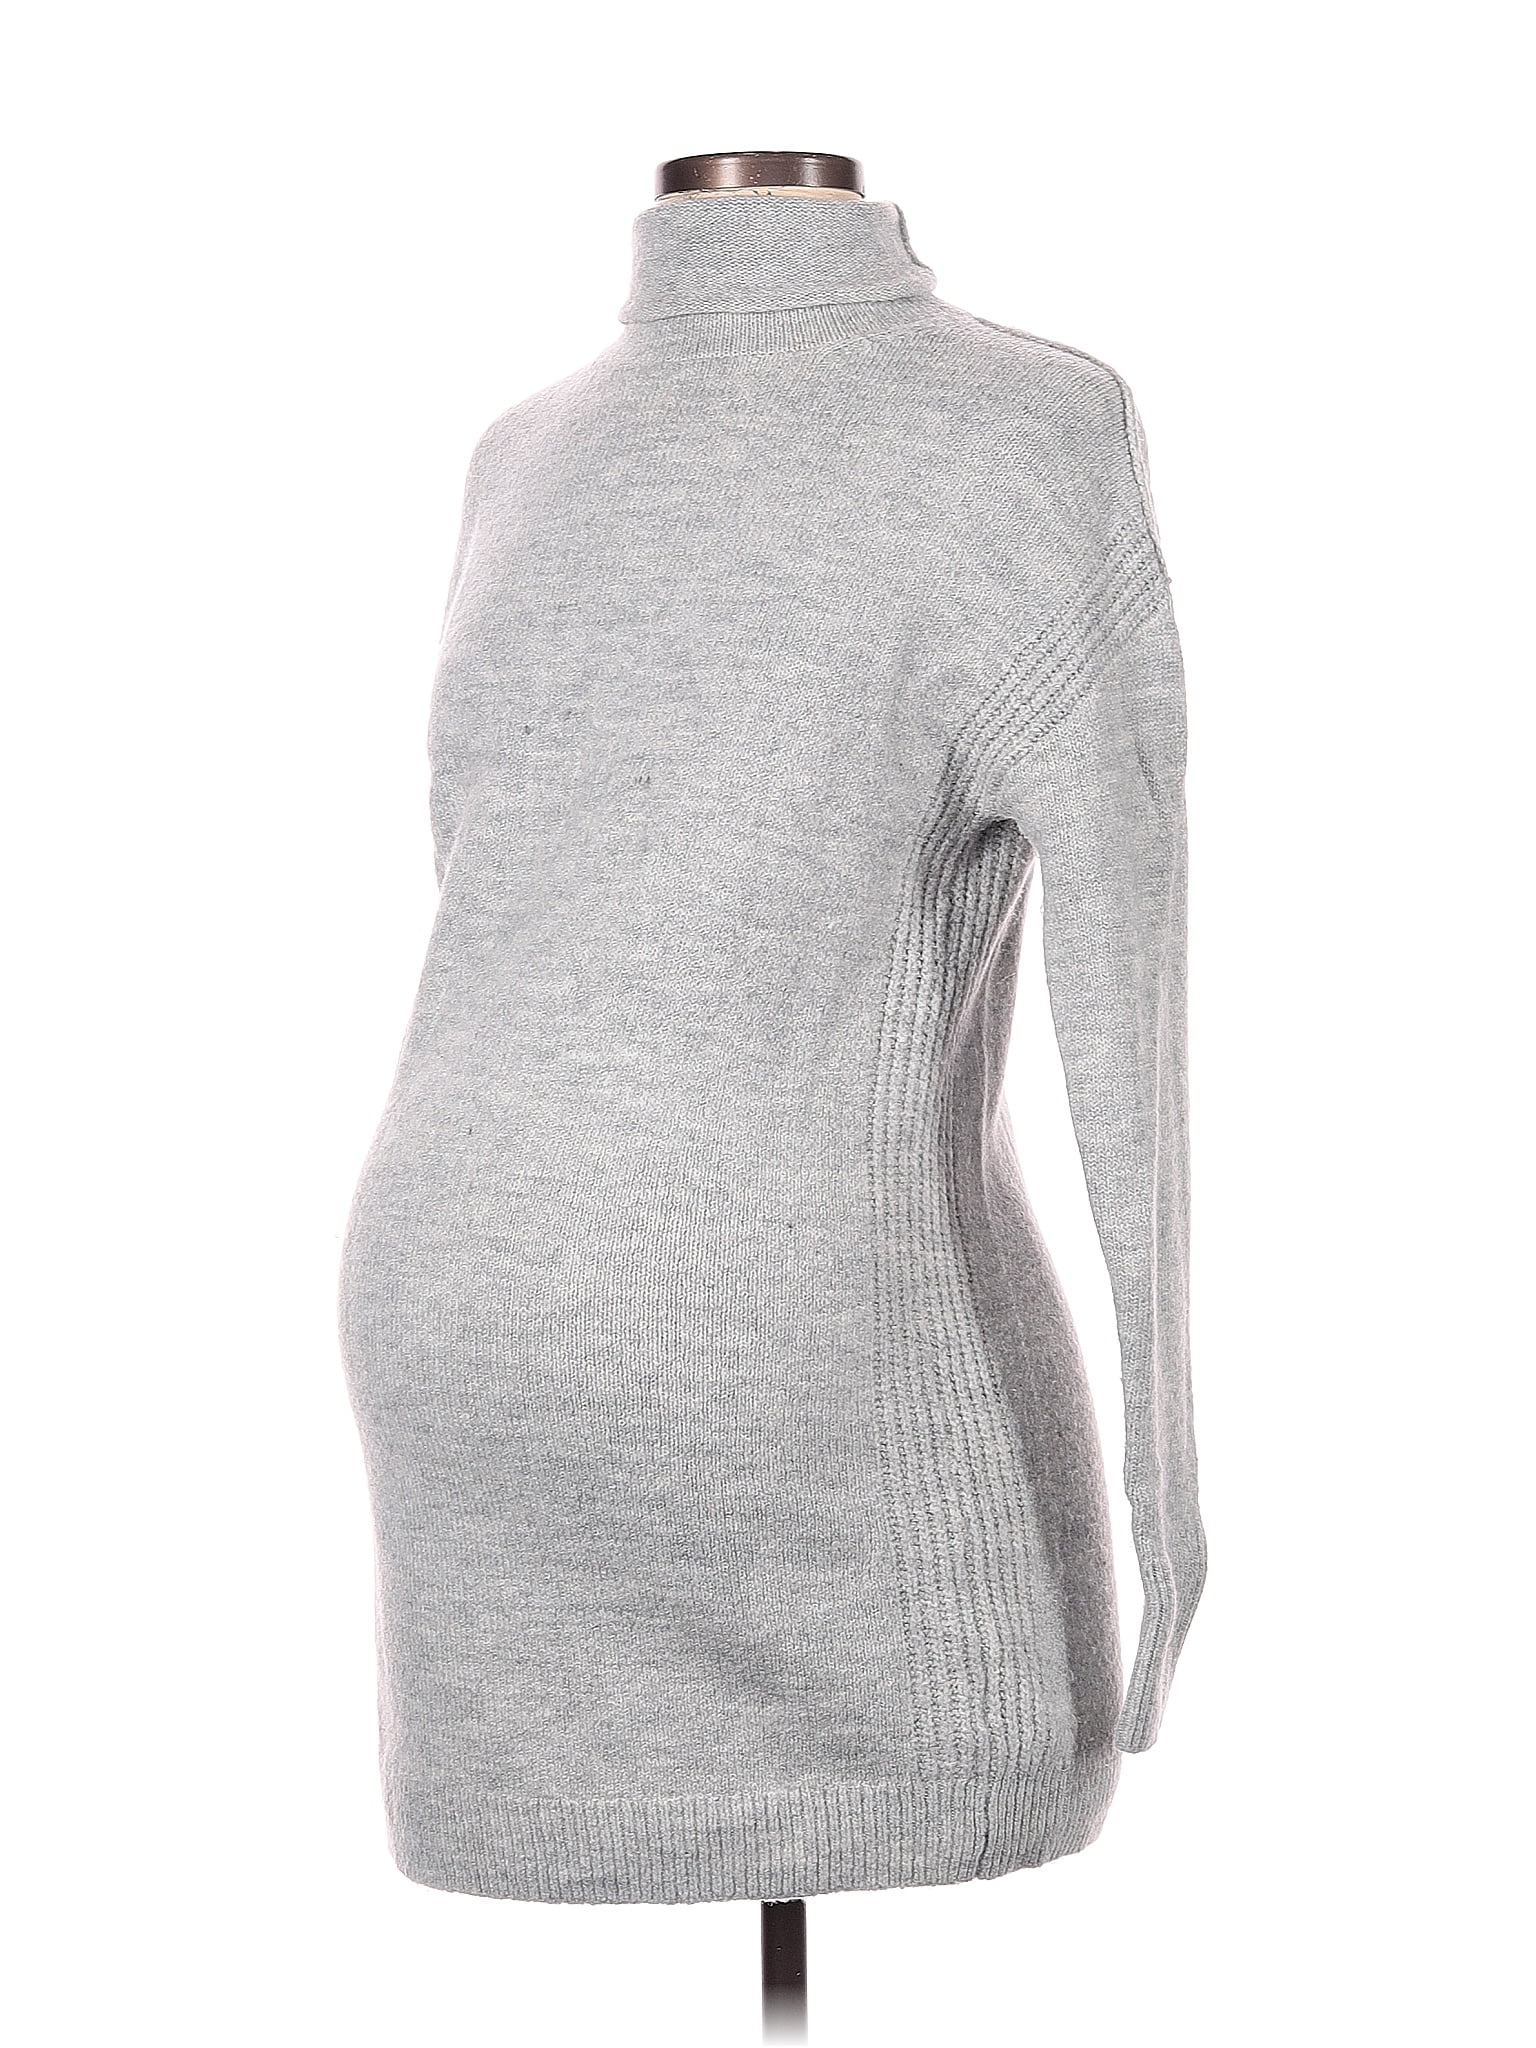 Gap - Maternity Marled Gray Turtleneck Sweater Size XS (Maternity) - 60% off